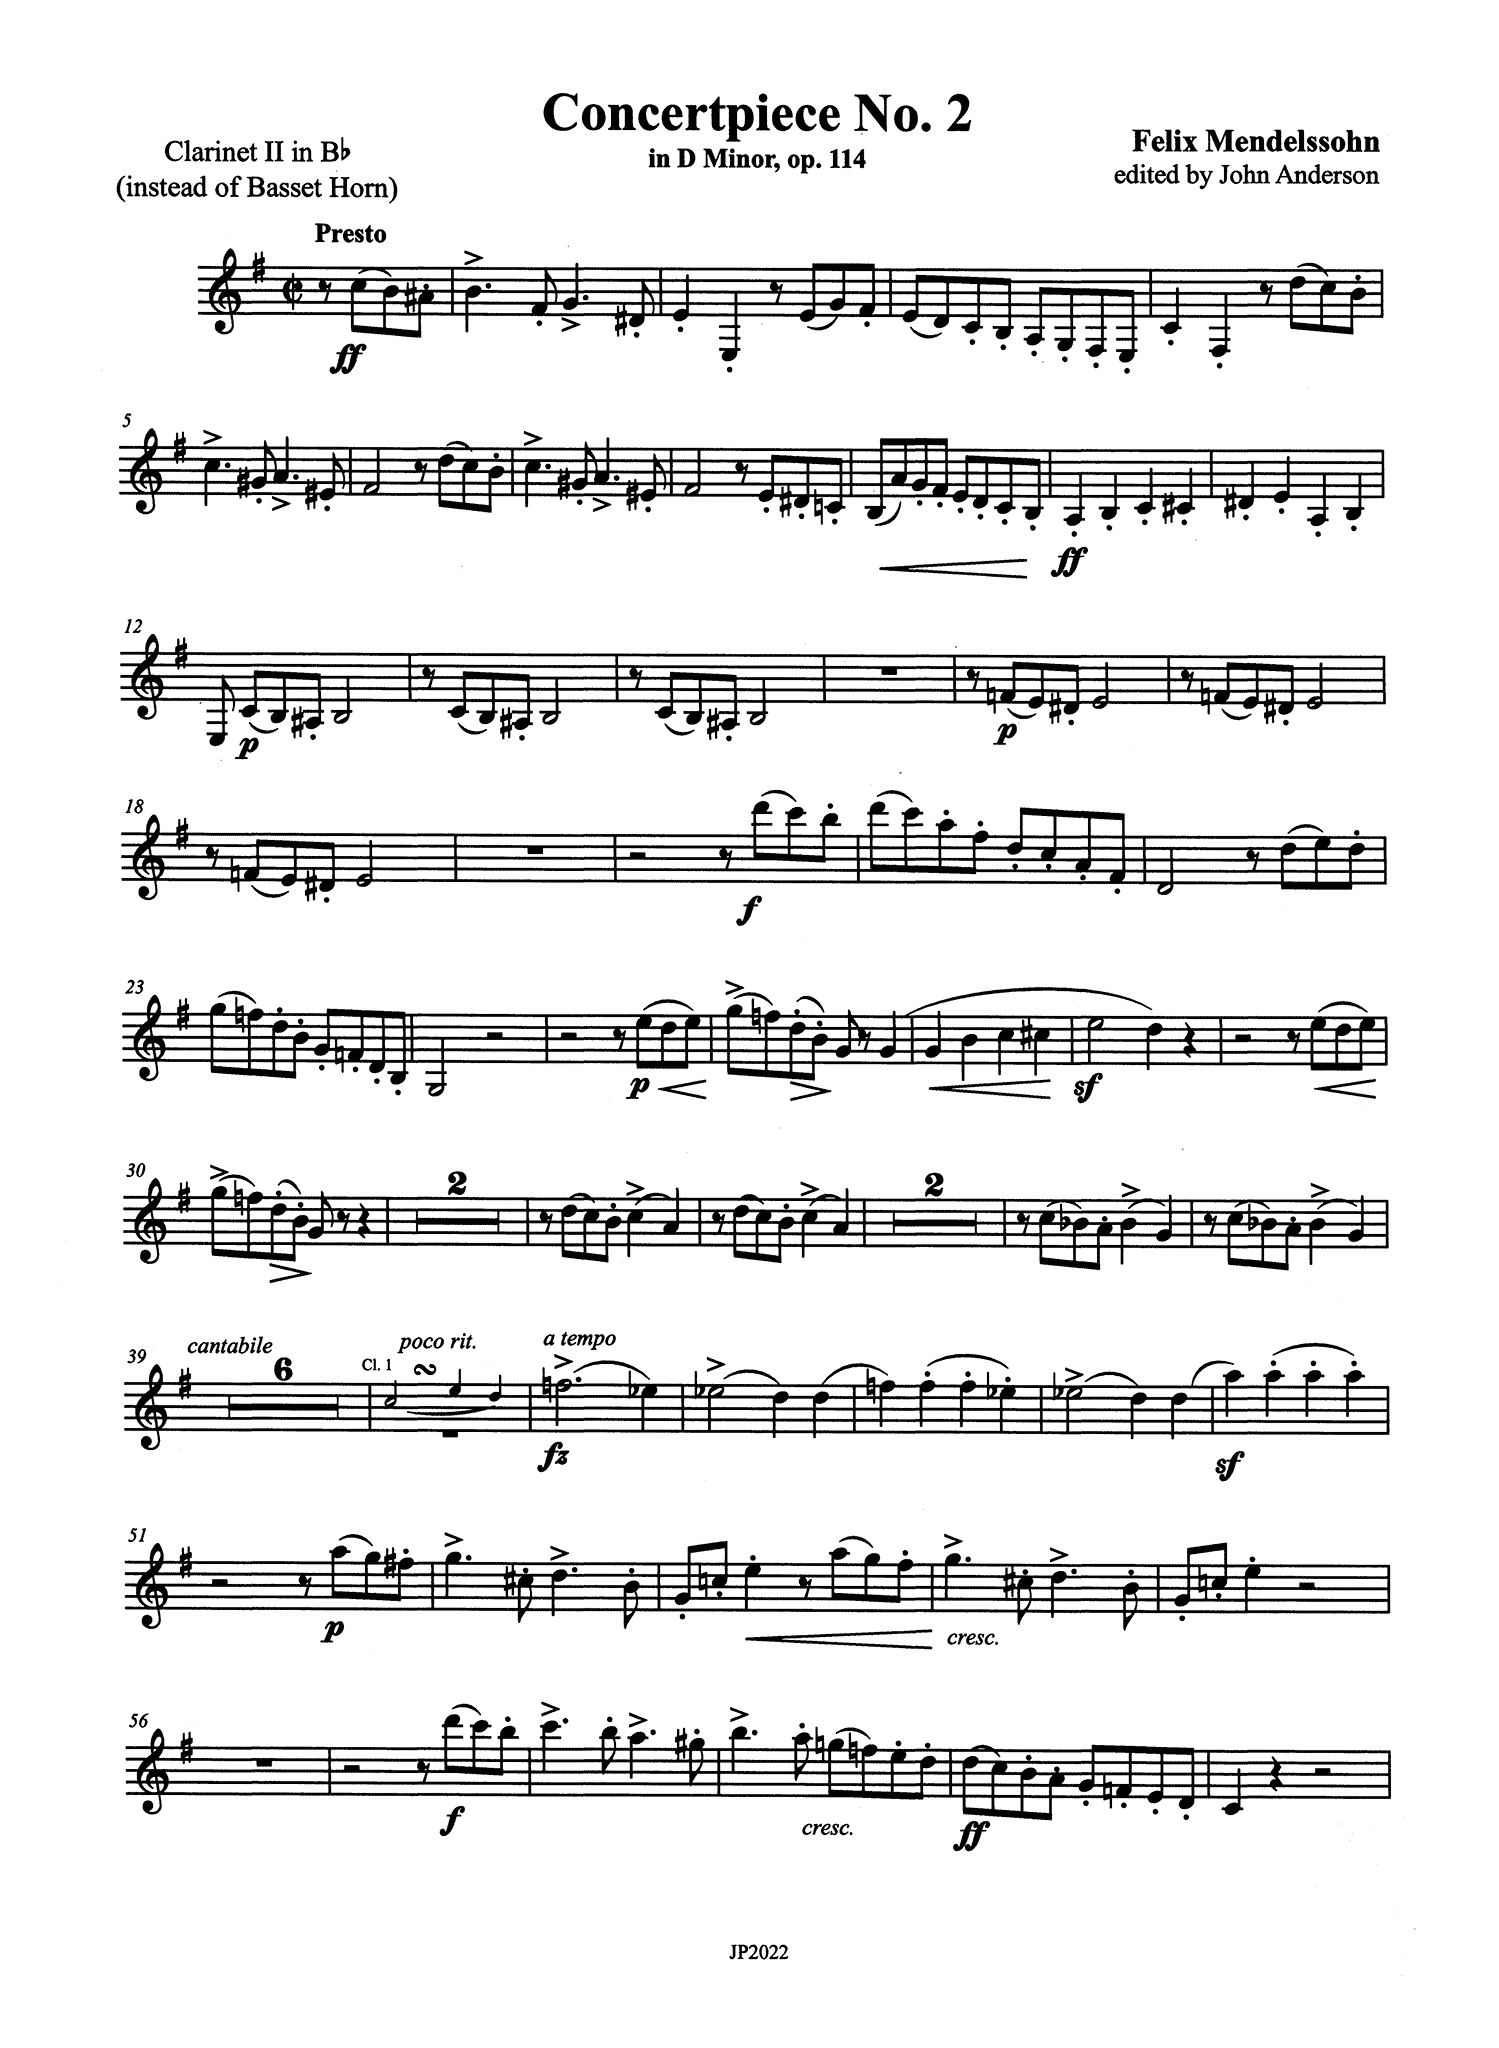 Mendelssohn No. 2 in D Minor, Op. 114 Alternate Second B-flat clarinet part